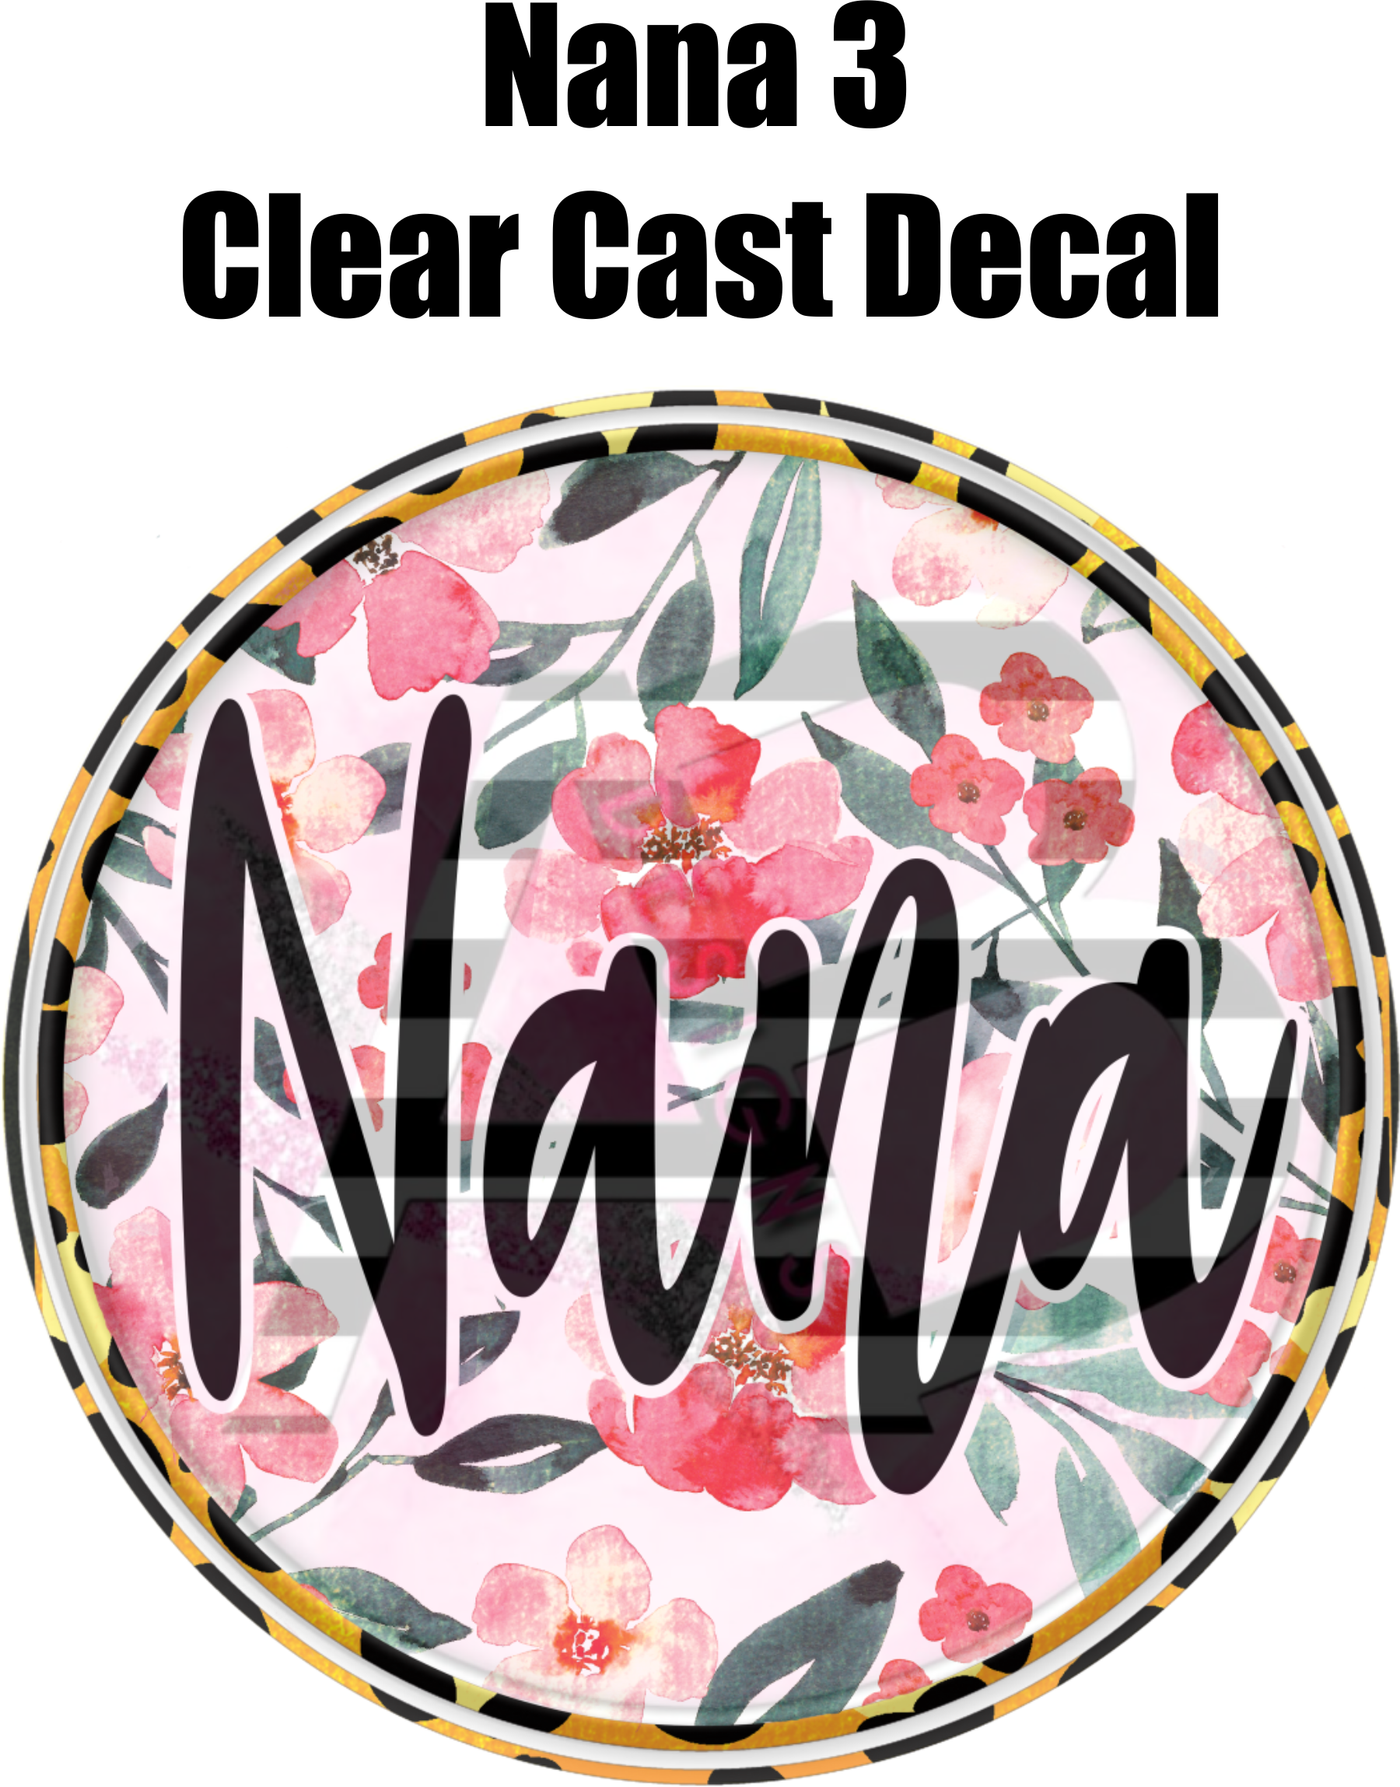 Nana 3 - Clear Cast Decal